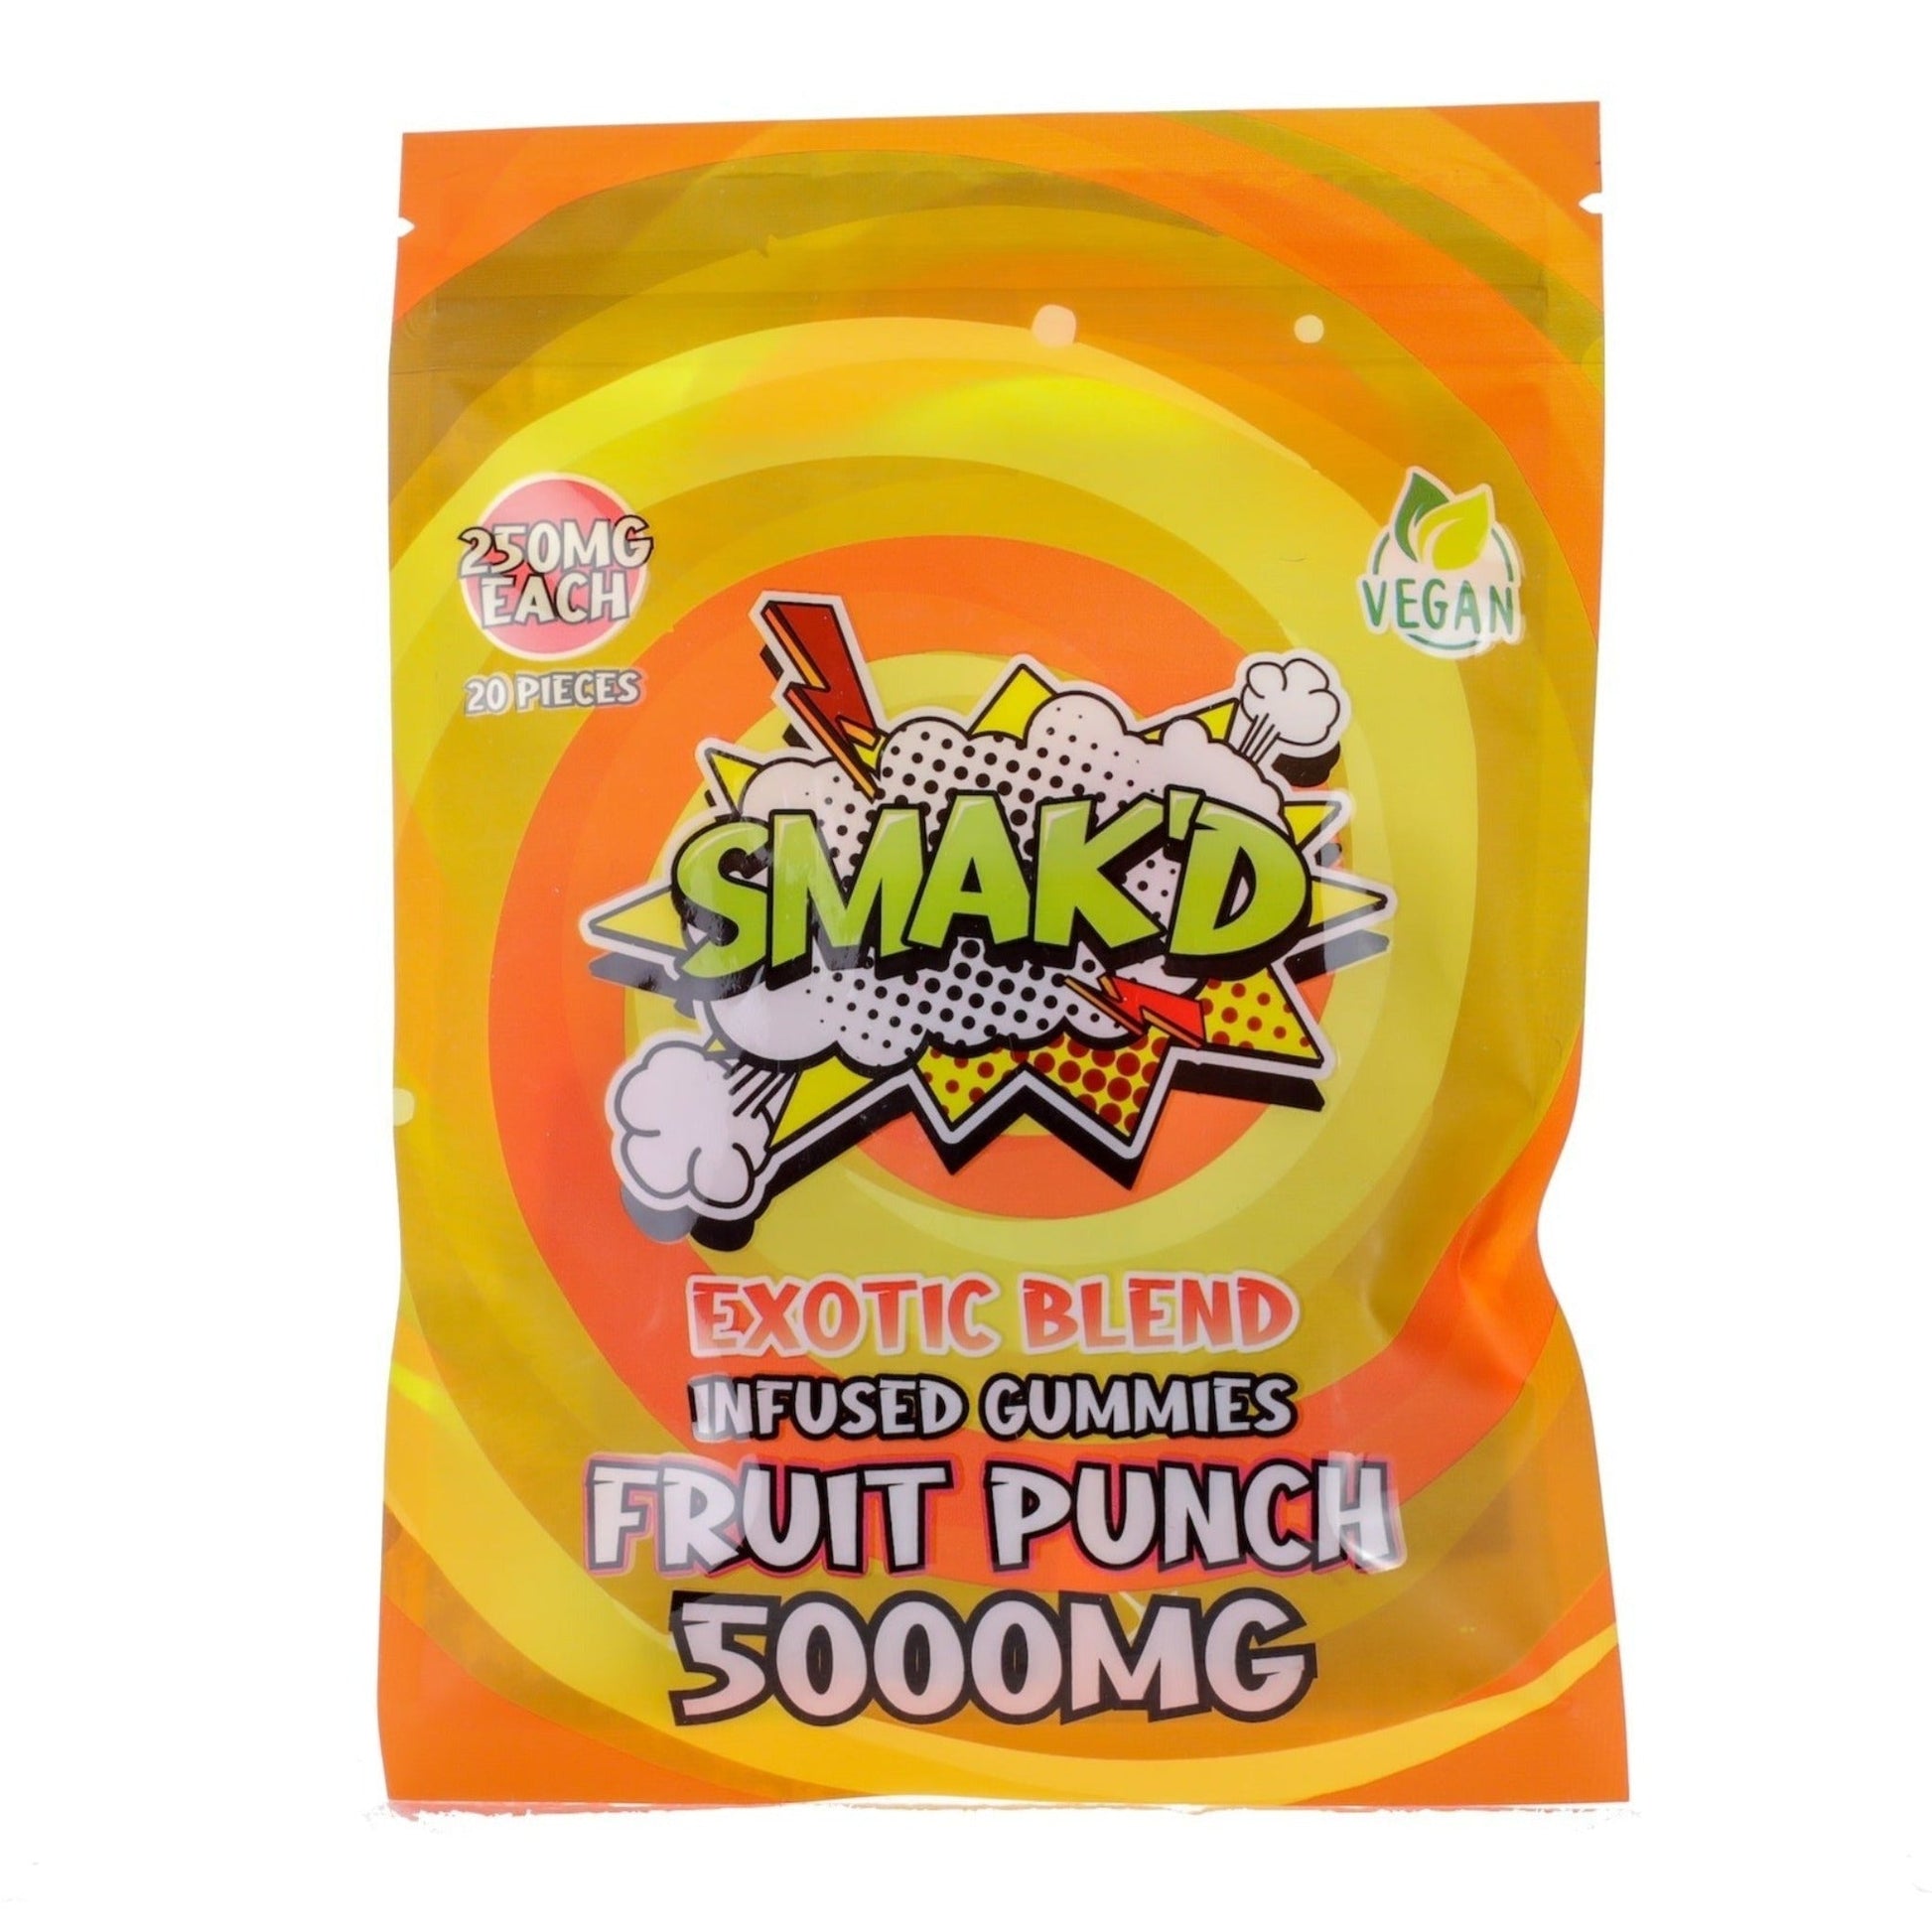 Smakd Exotic Blend Gummies - 5000mg Fruit Punch